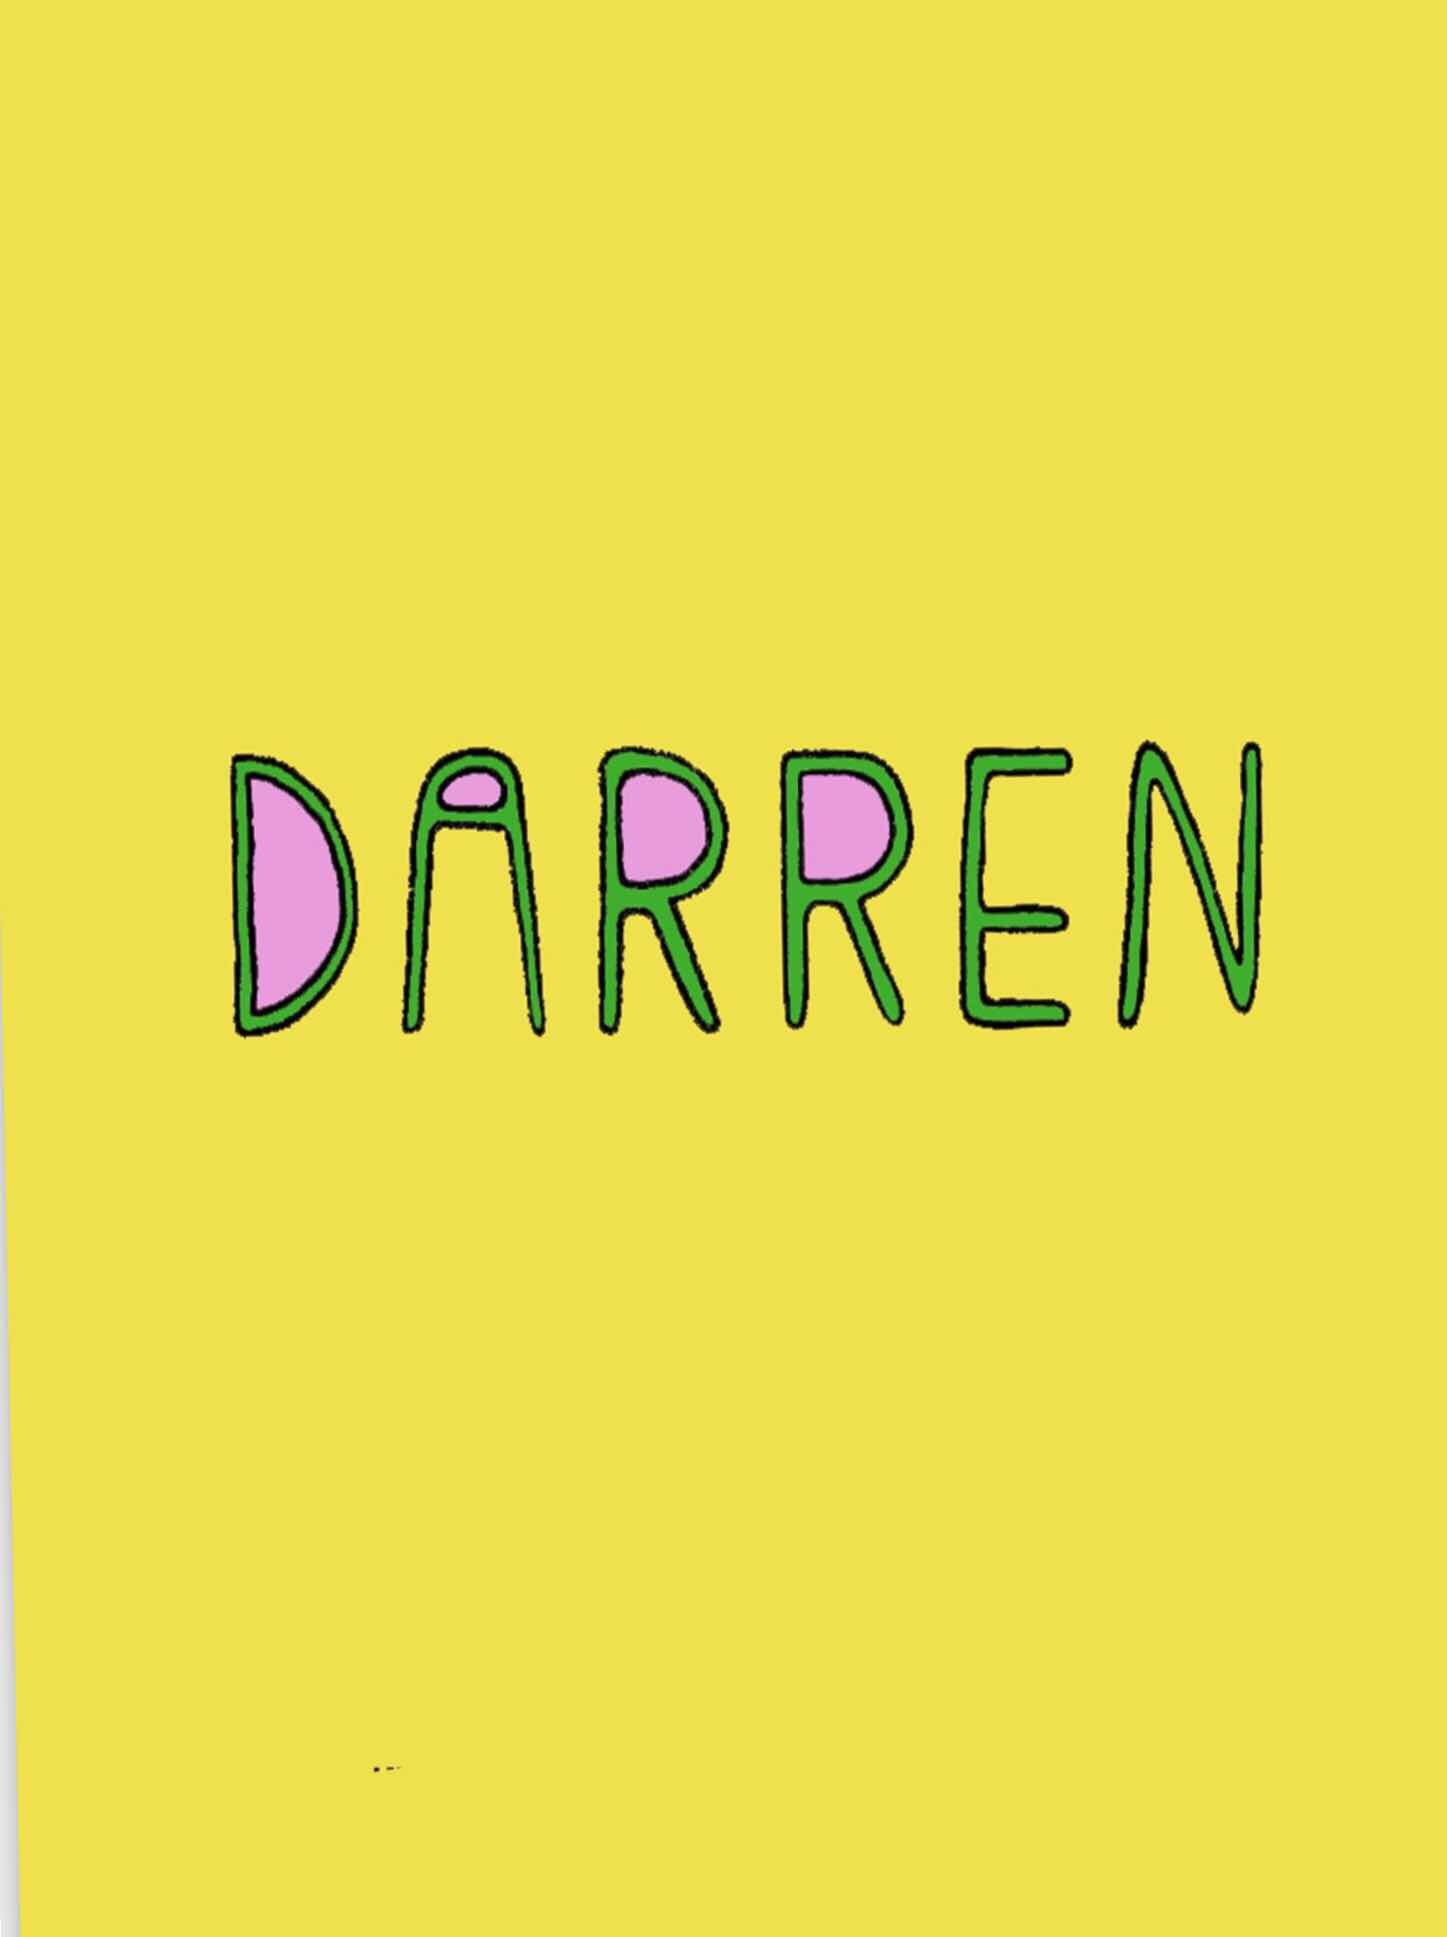 Darren by Stanley Miller